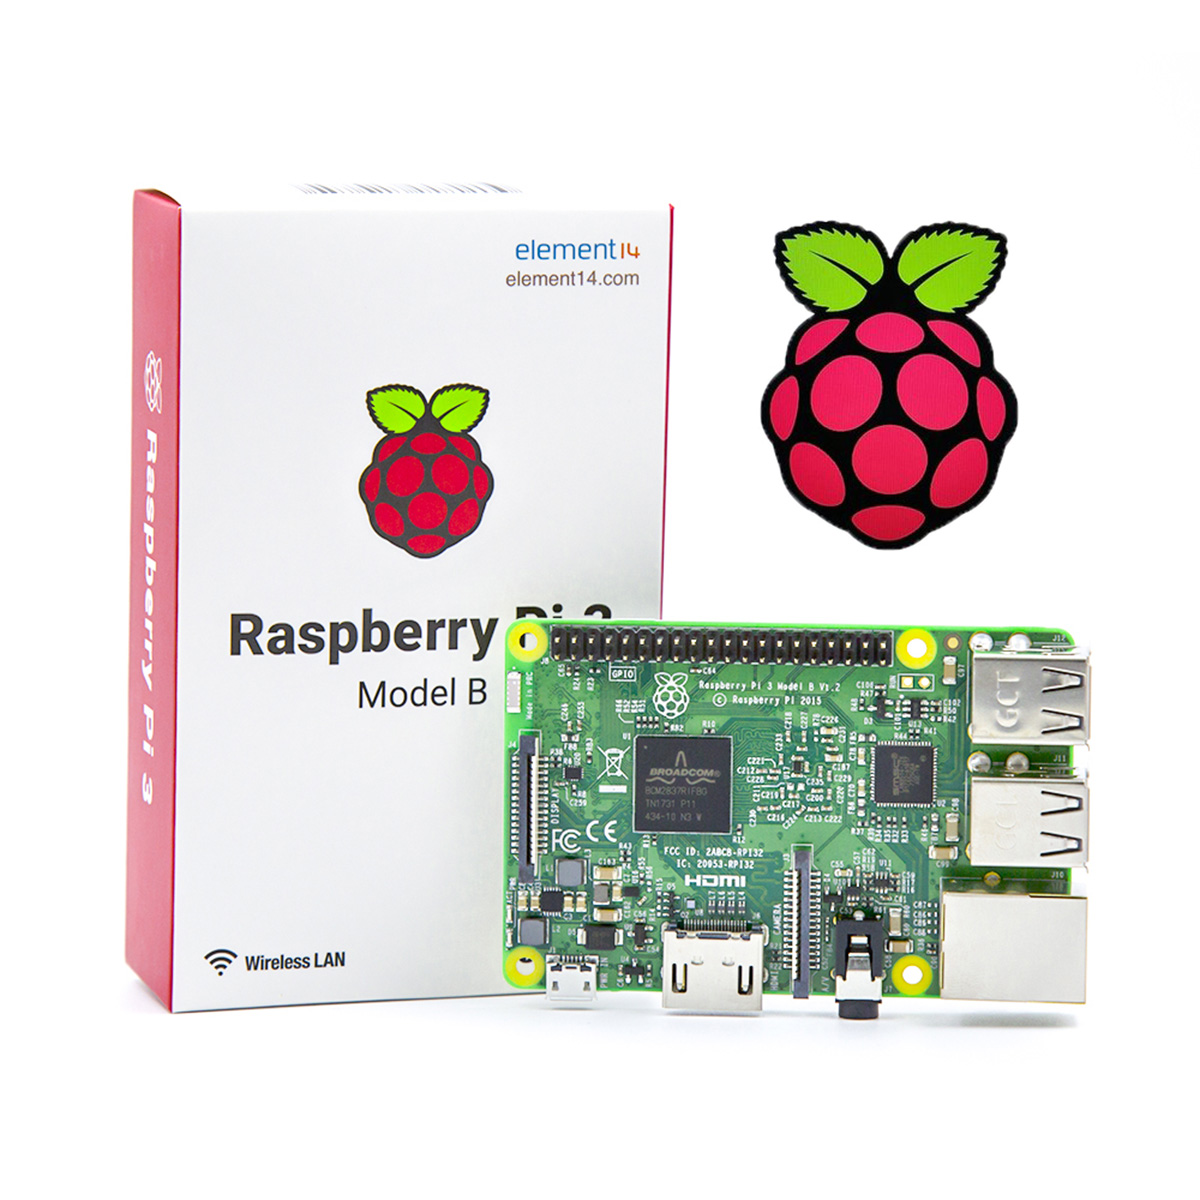 Raspberry - Pi 3 - Model B - Quadcore 1.2ghz - 1GB RAM